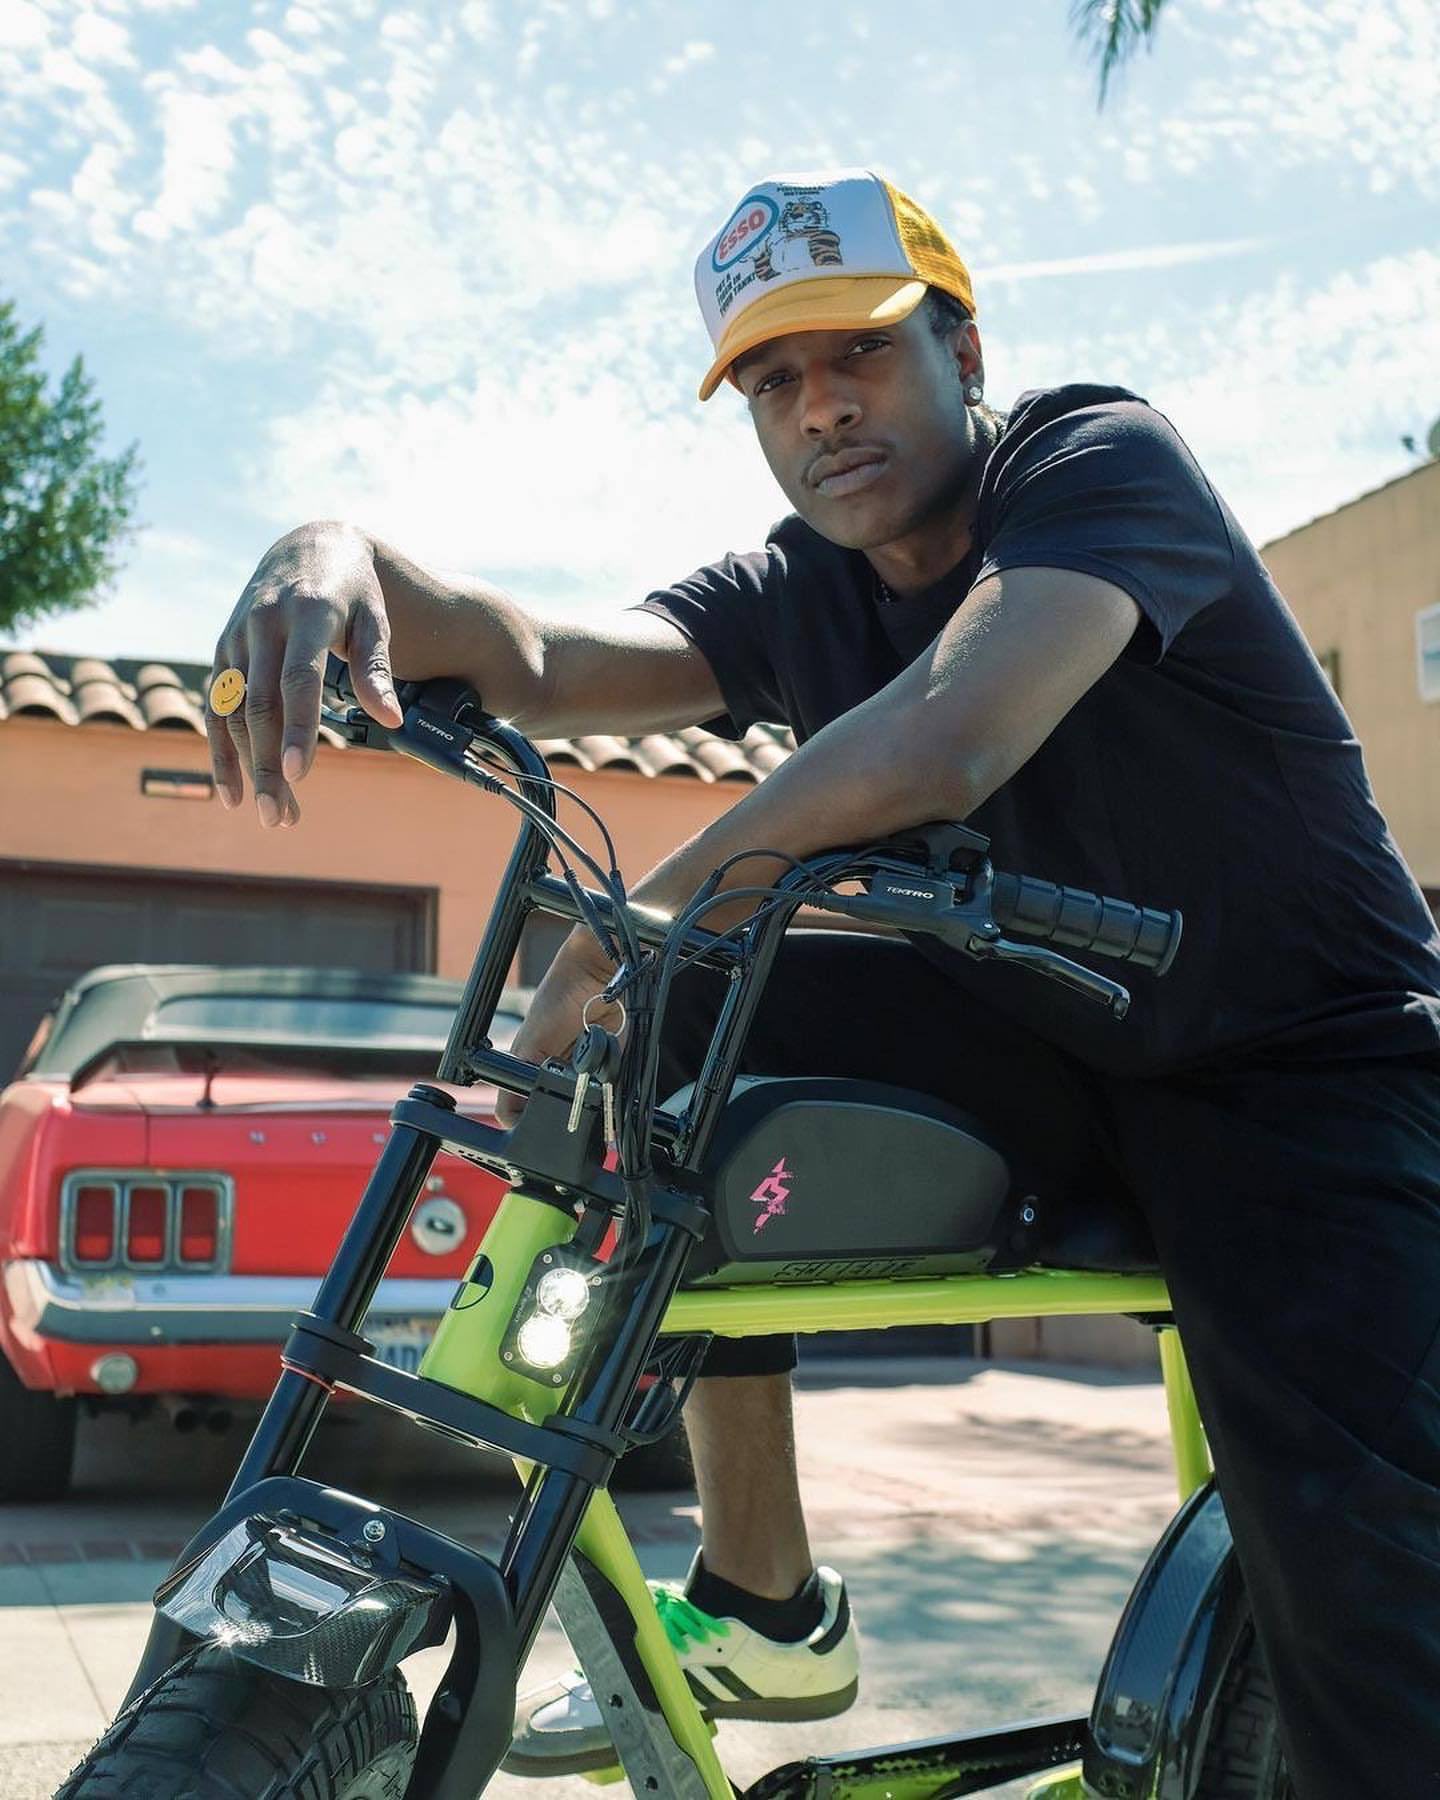 A$AP ROCKY OUTFITS on "ASAP in Adidas Samba , Riding a Supre73 E-Bike https://t.co/s2CvYDeQOH" / X